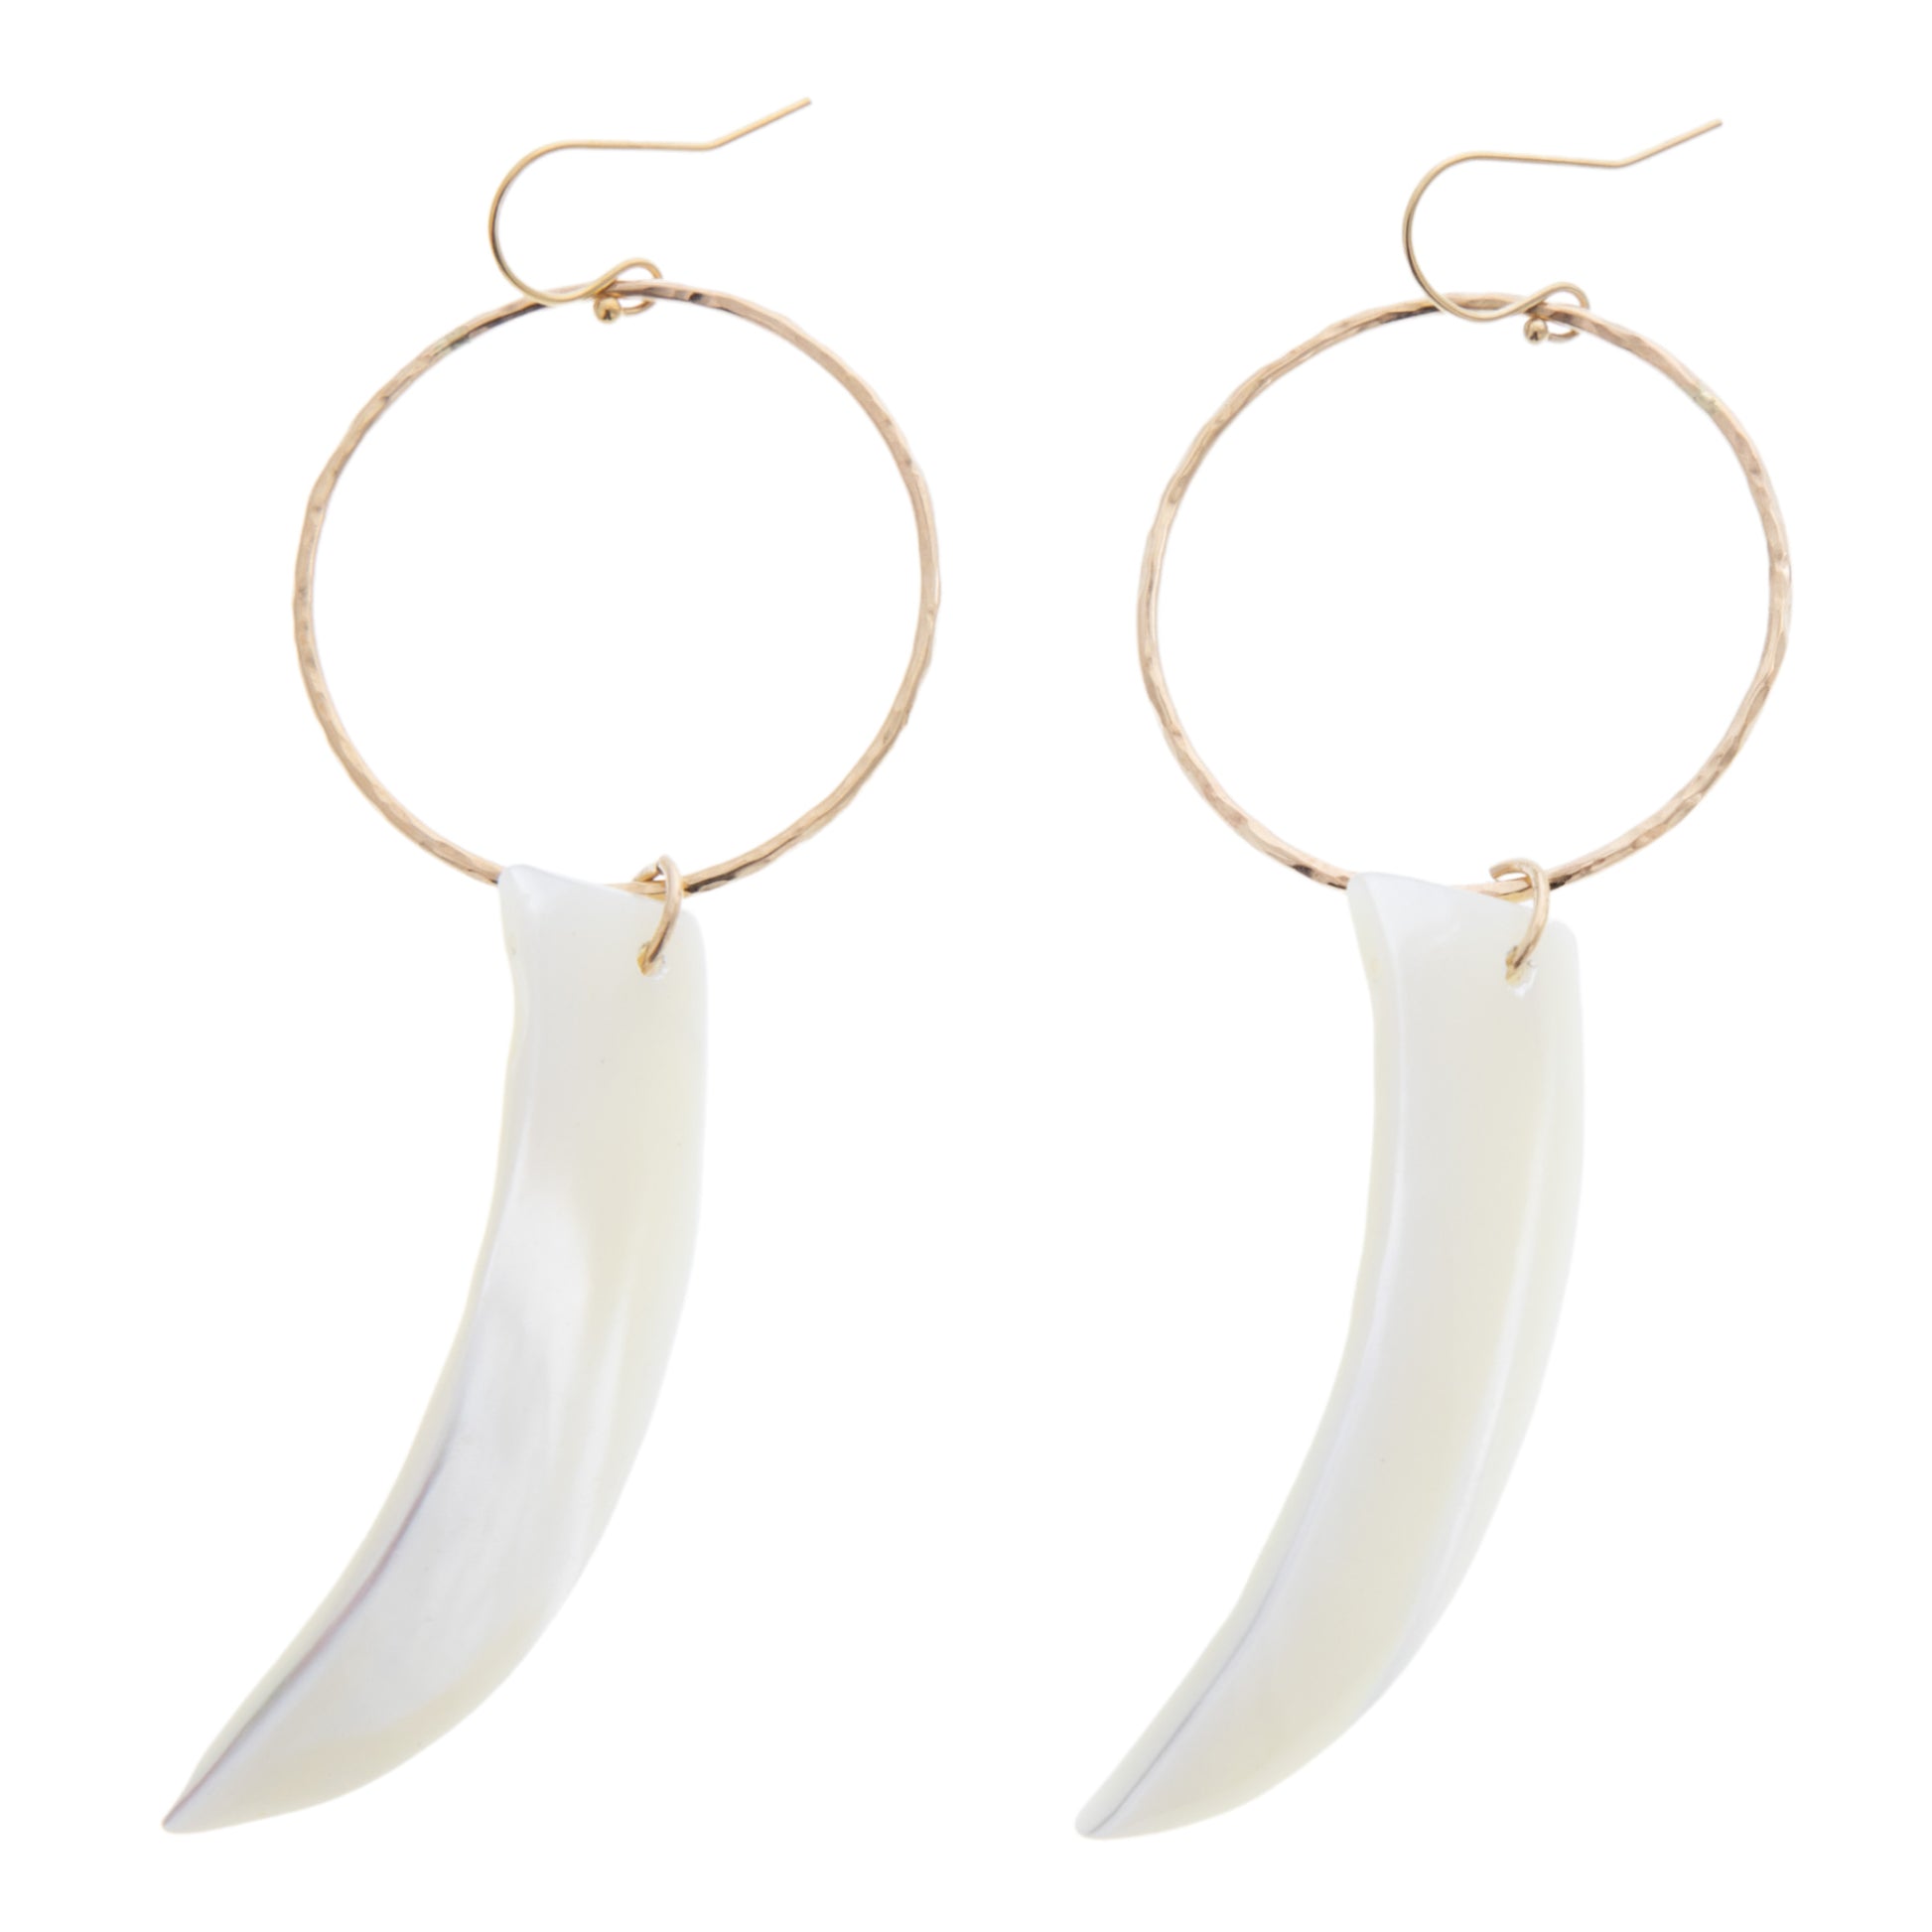 Haumea Tusk Earrings - 21 Degrees North Designs - 21ºN